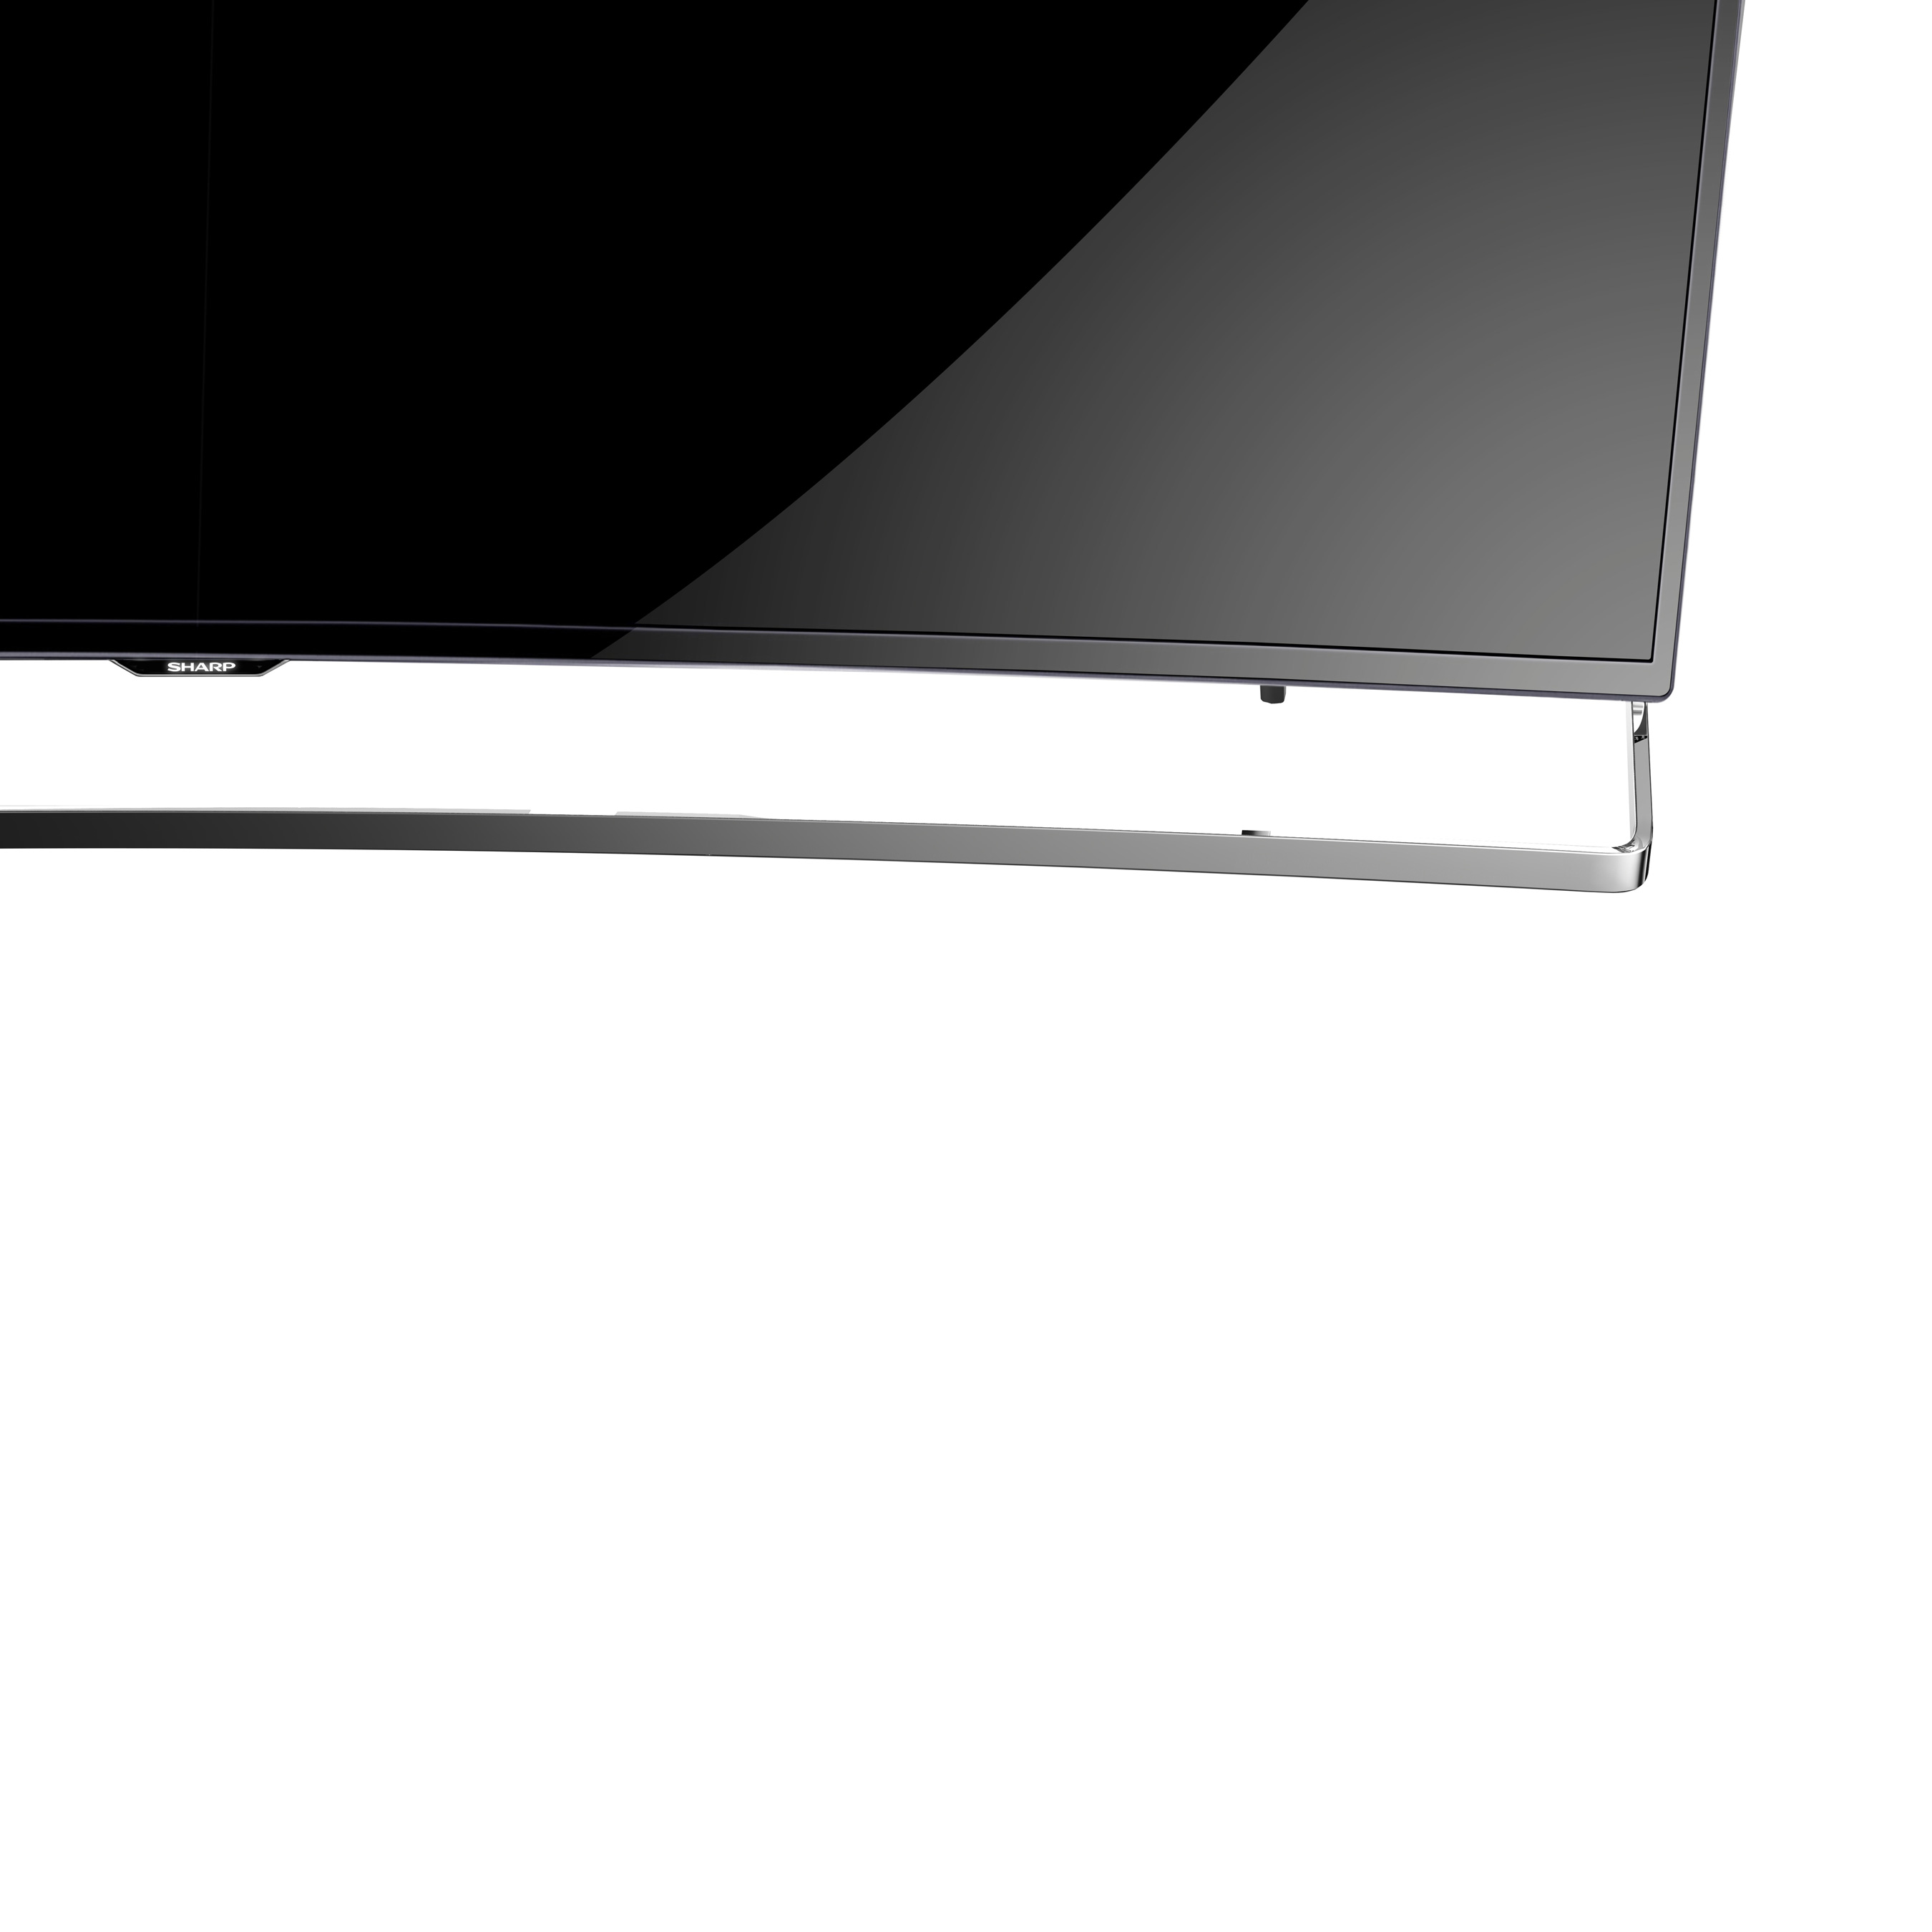 Sharp LC-65N9000U - 65" Diagonal Class (64.5" viewable) - Aquos - curved 3D LED-backlit LCD TV - Smart TV - 4K UHD (2160p) 3840 x 2160 - HDR - Quantum Dot - image 3 of 7